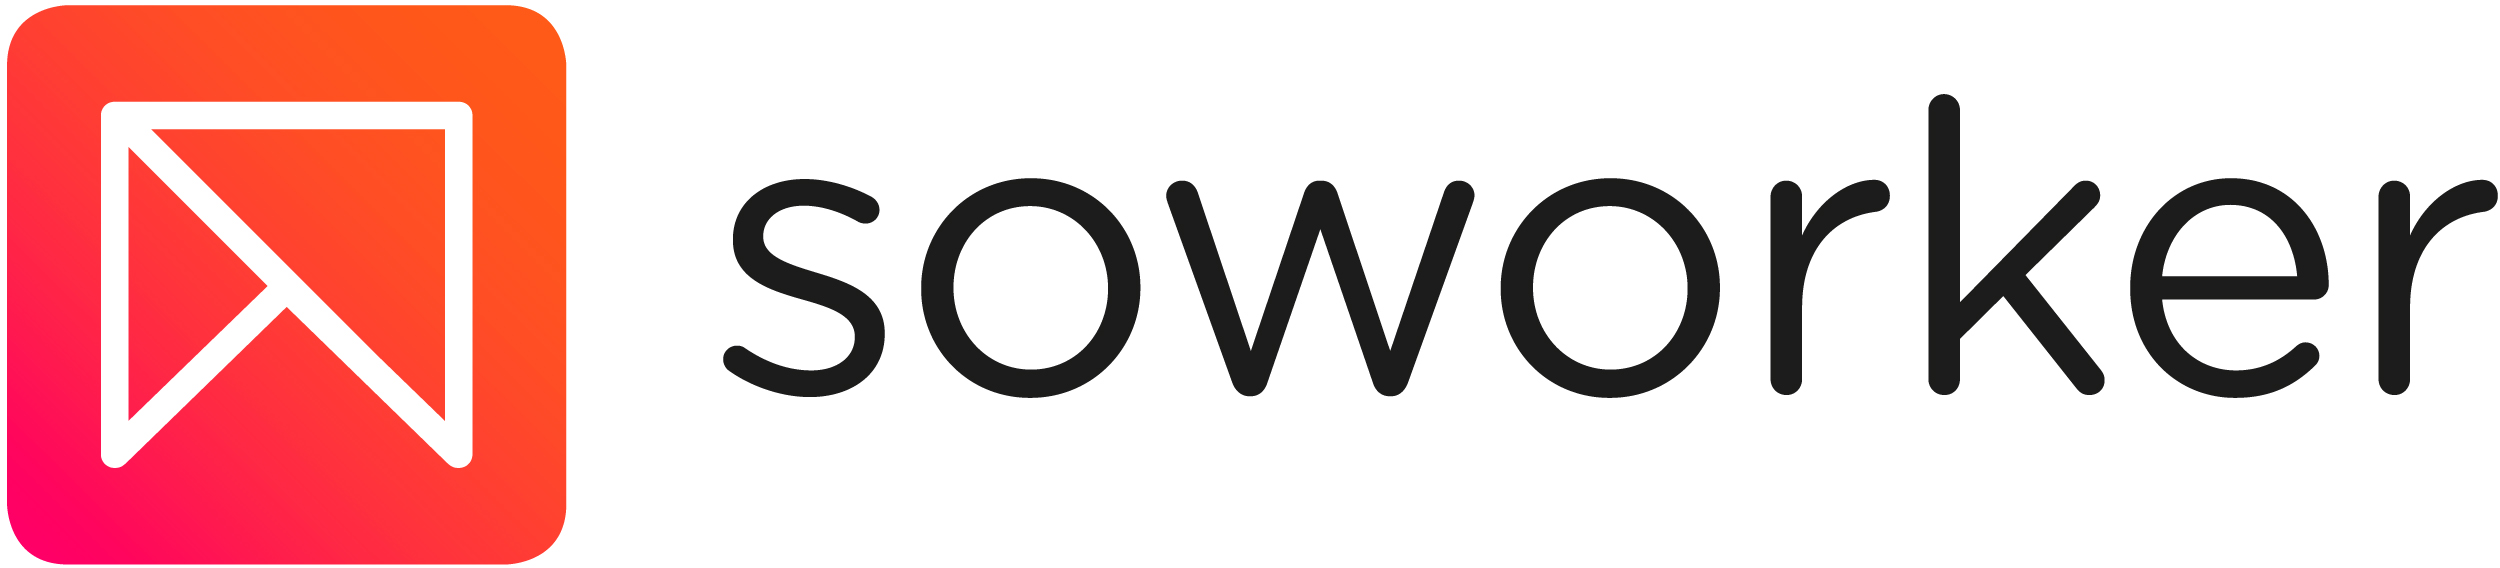 Soworker logo.jpg